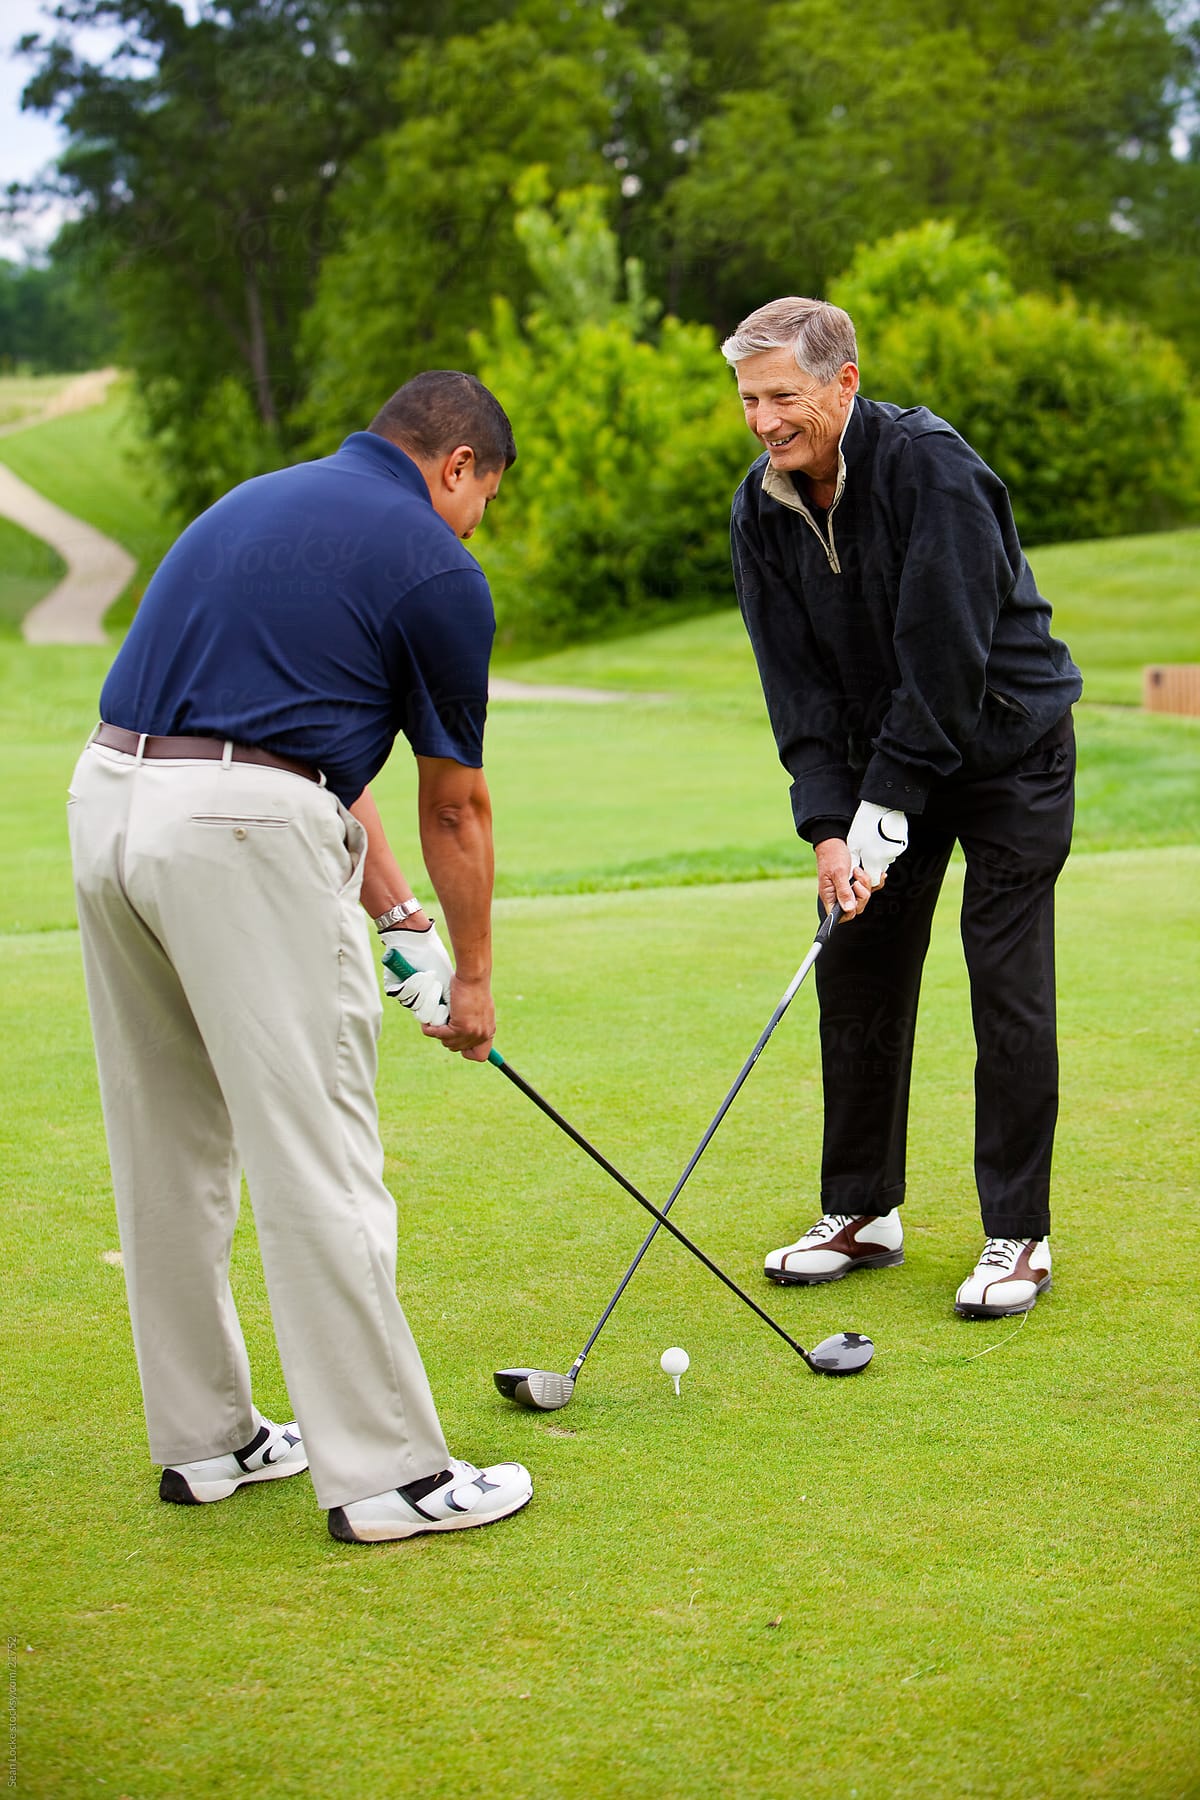 Golf: Senior Male Taking Golf Lesson